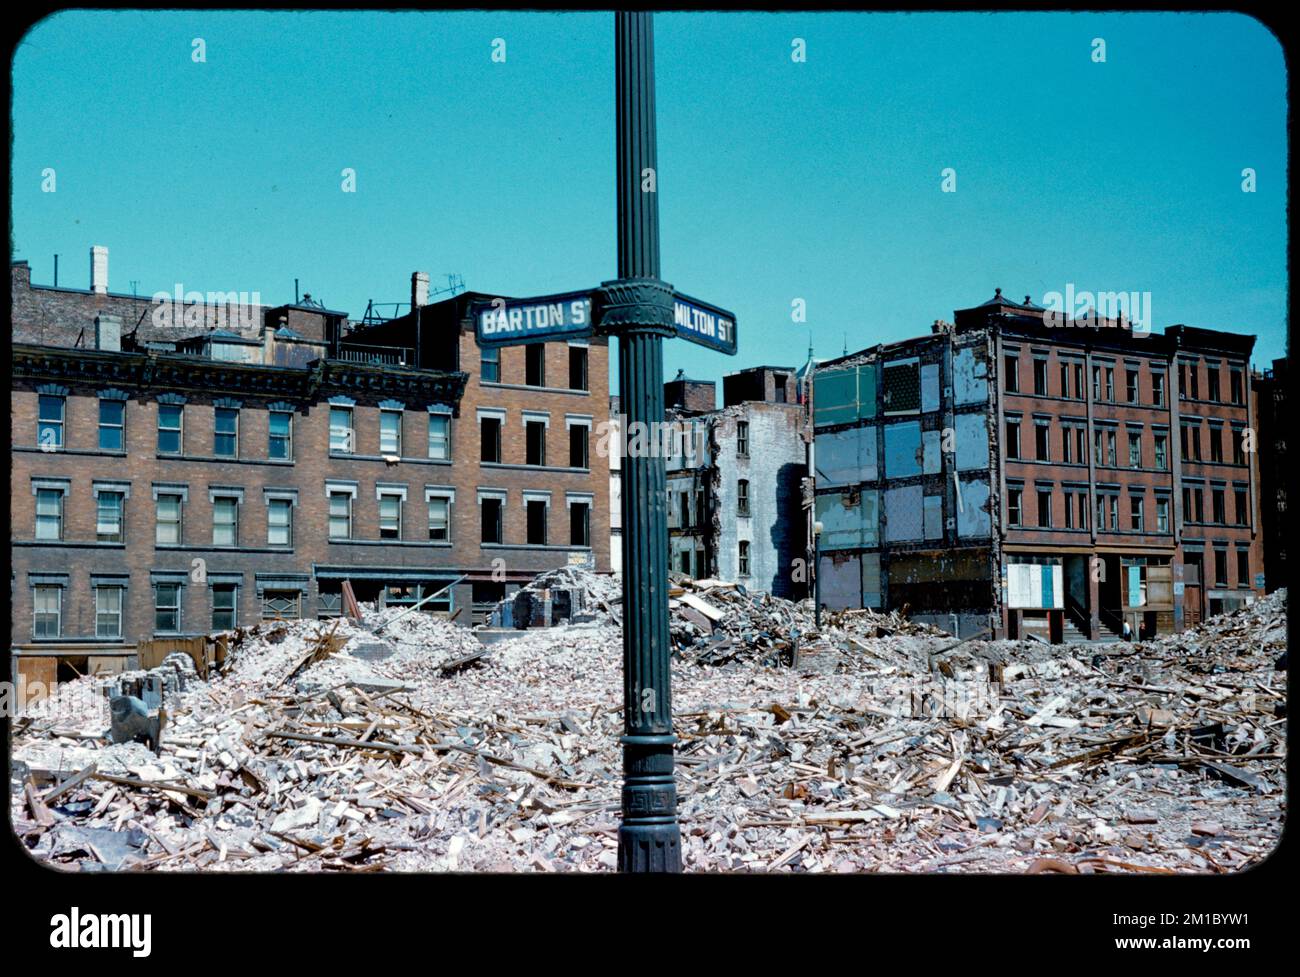 West End ruins , Demolition, Ruins, Traffic signs & signals, Urban ...